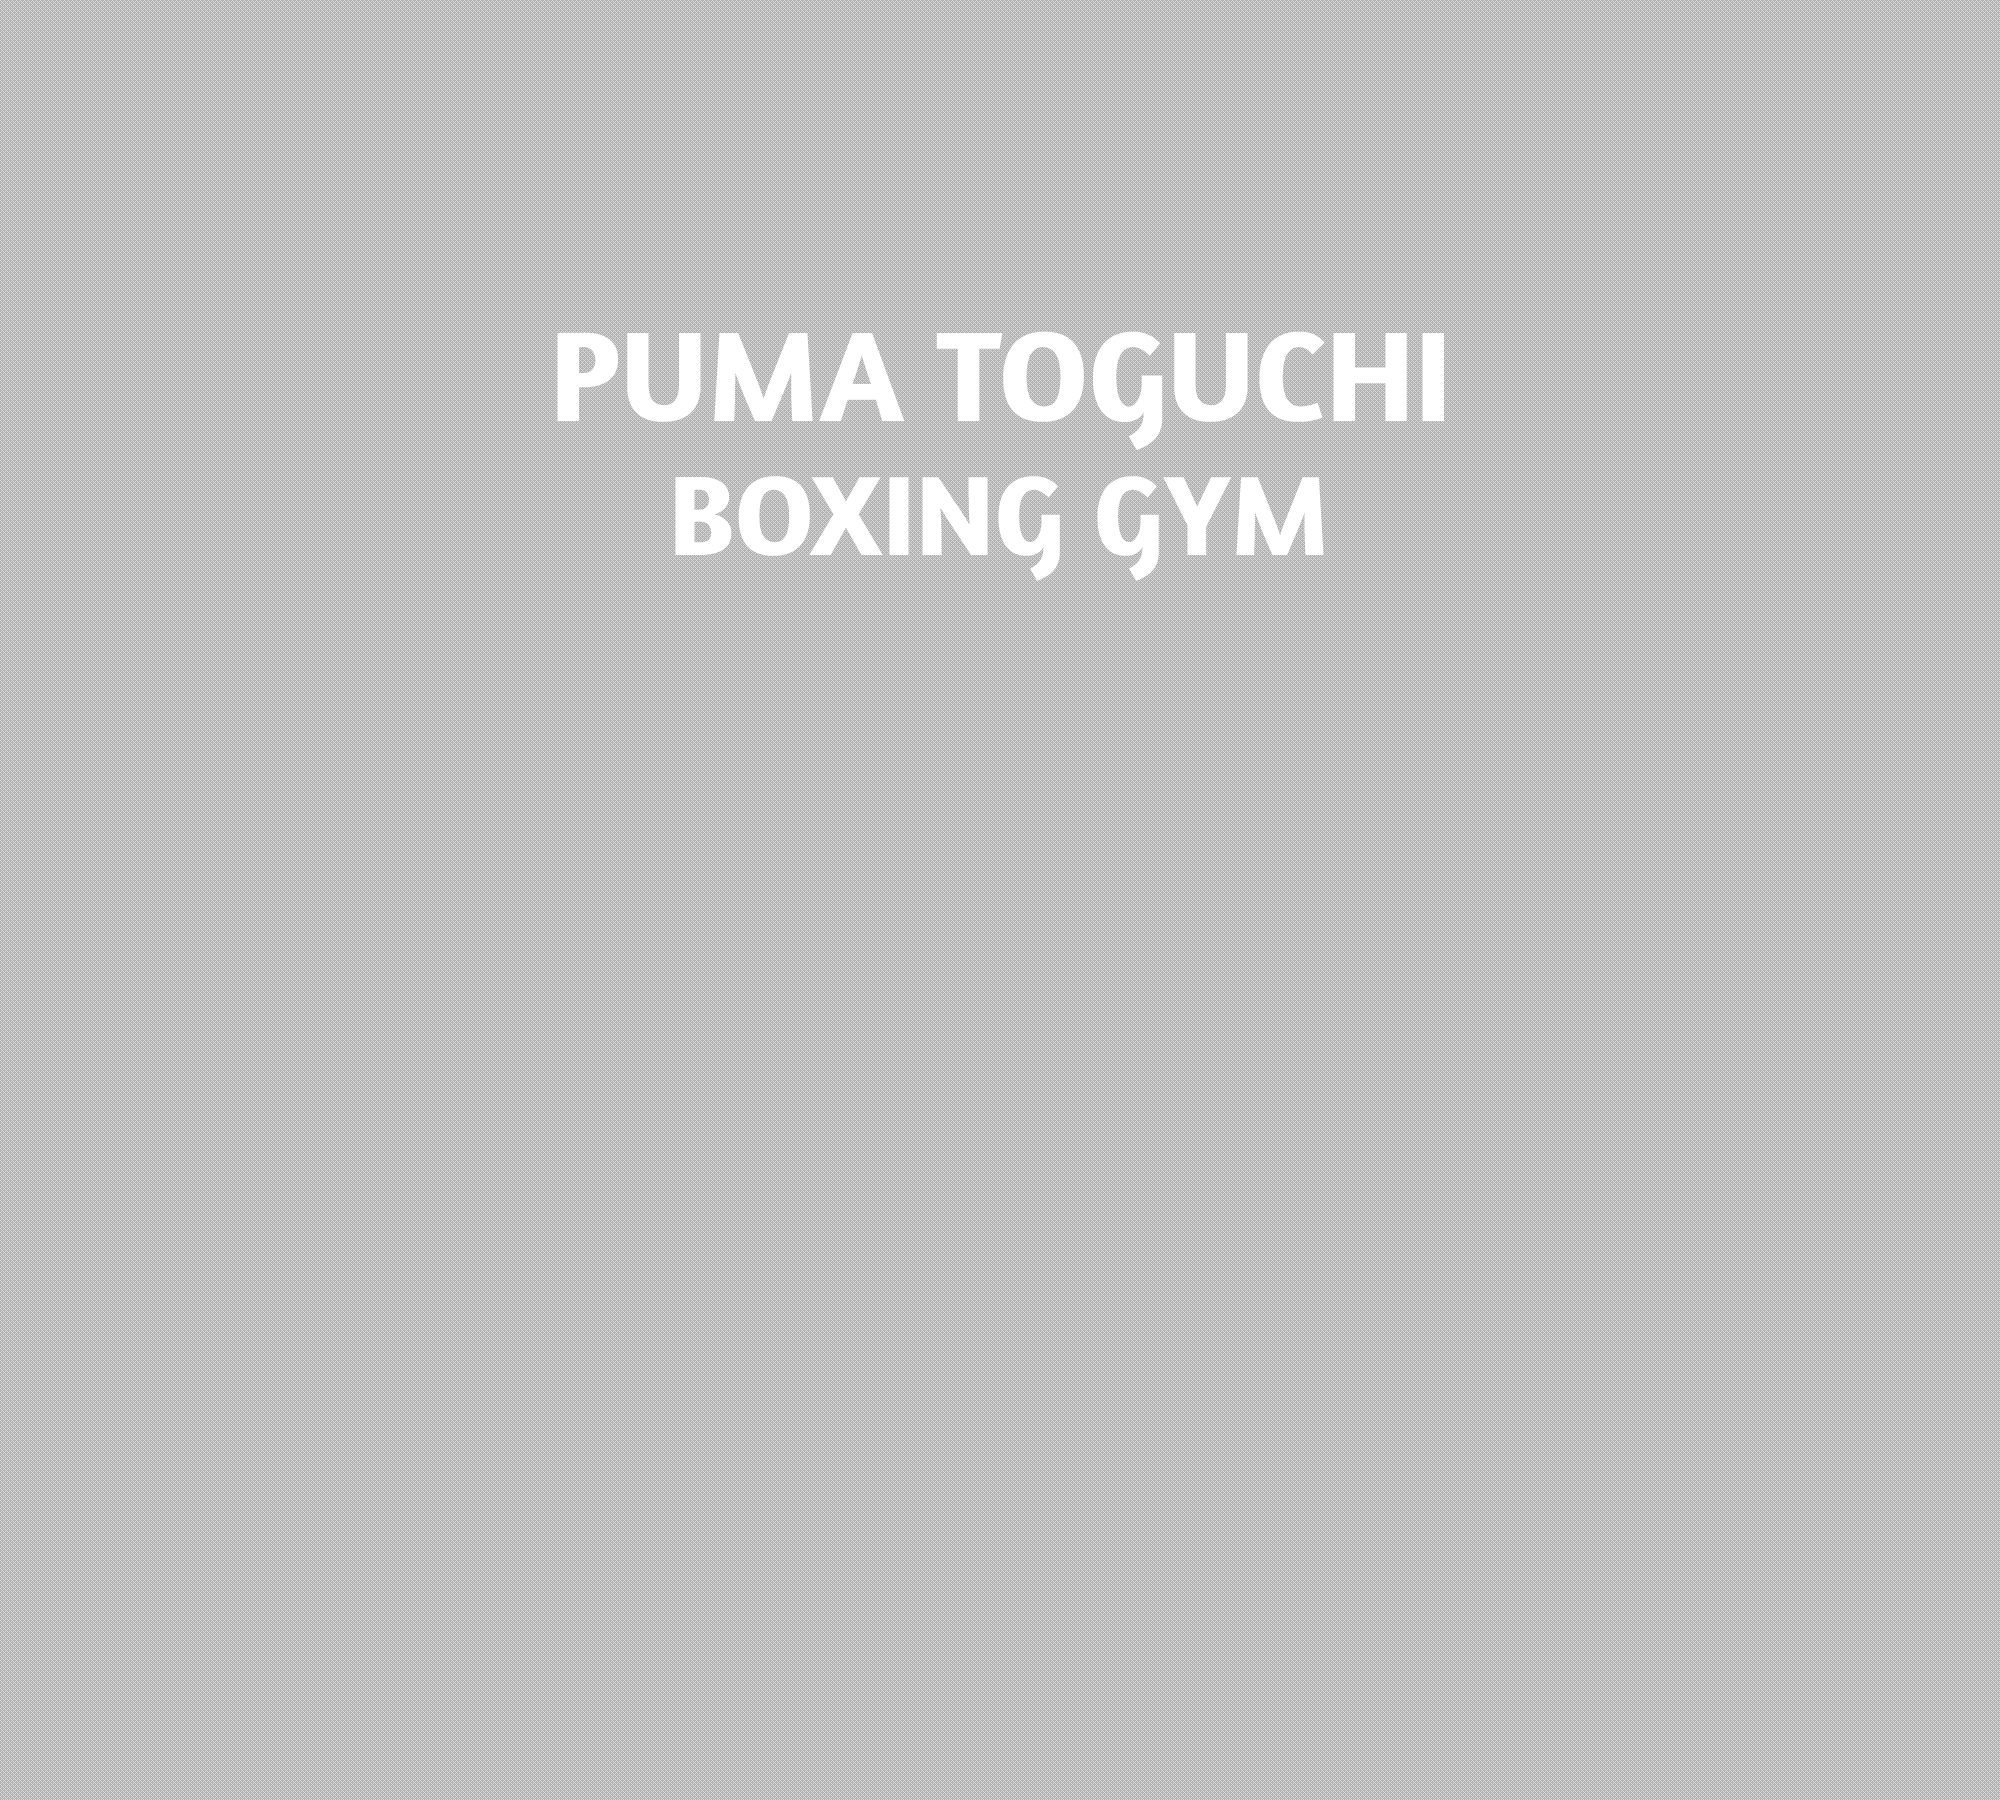 PUMA TOGUCHI BOXING GYM